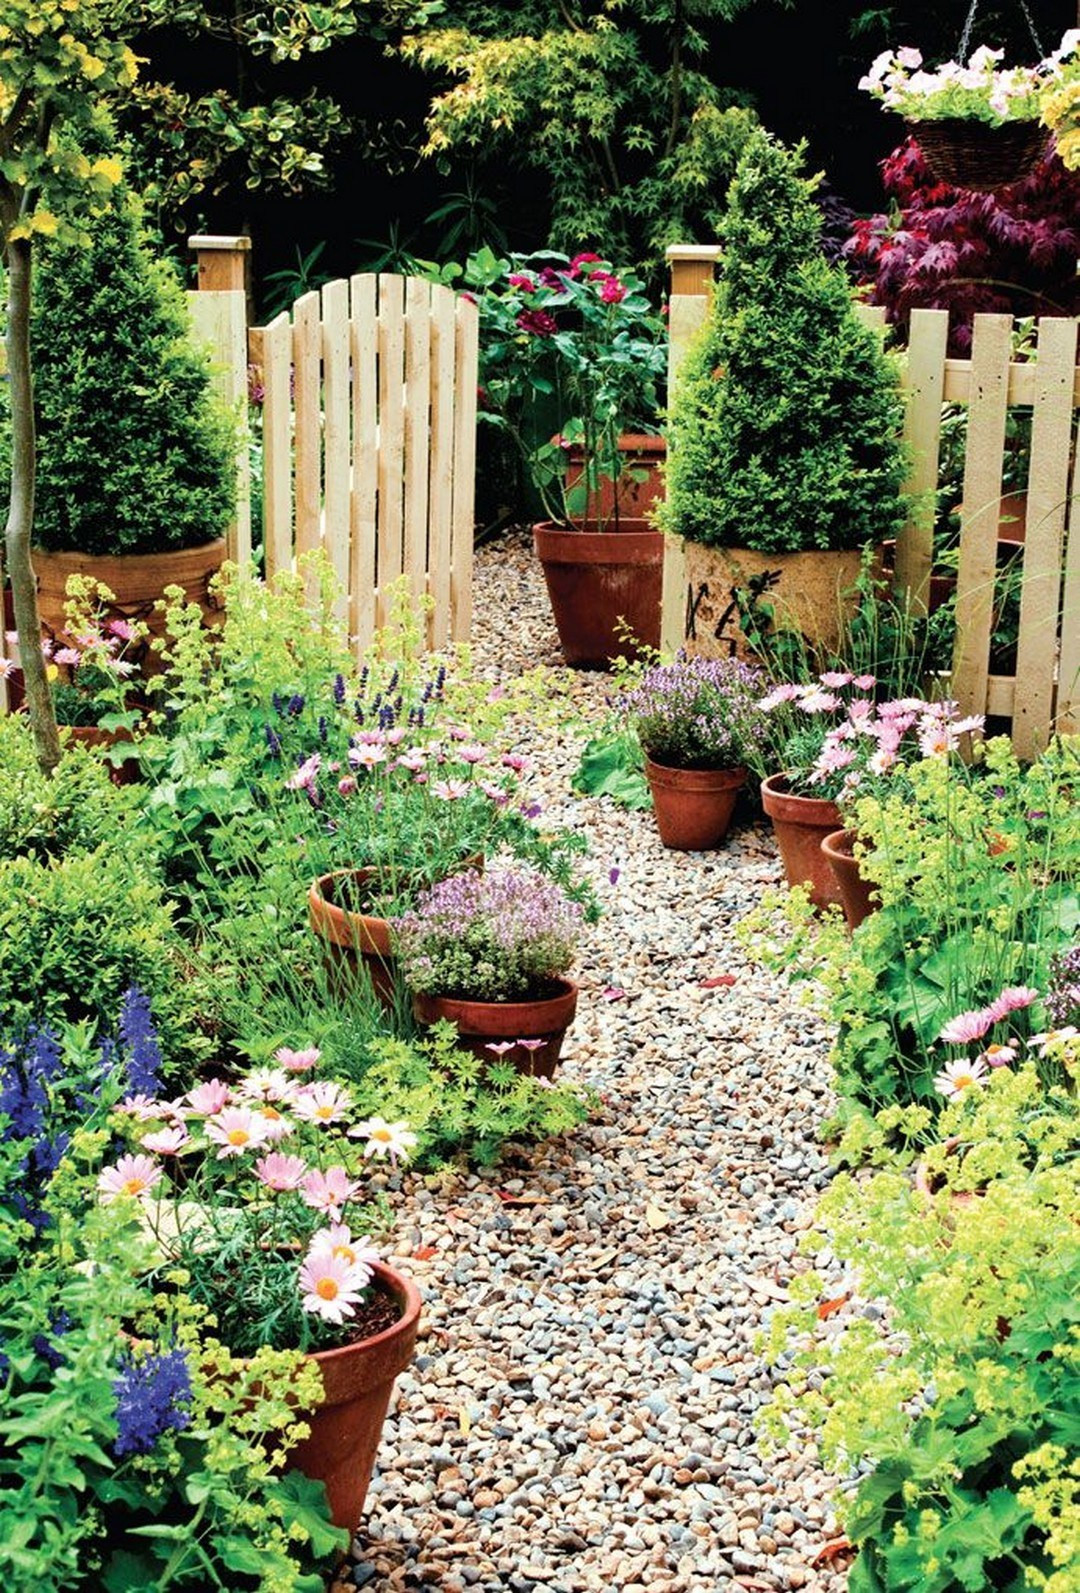 Best ideas about Garden Ideas Pinterest
. Save or Pin Best DIY Cottage Garden Ideas From Pinterest 8 Now.